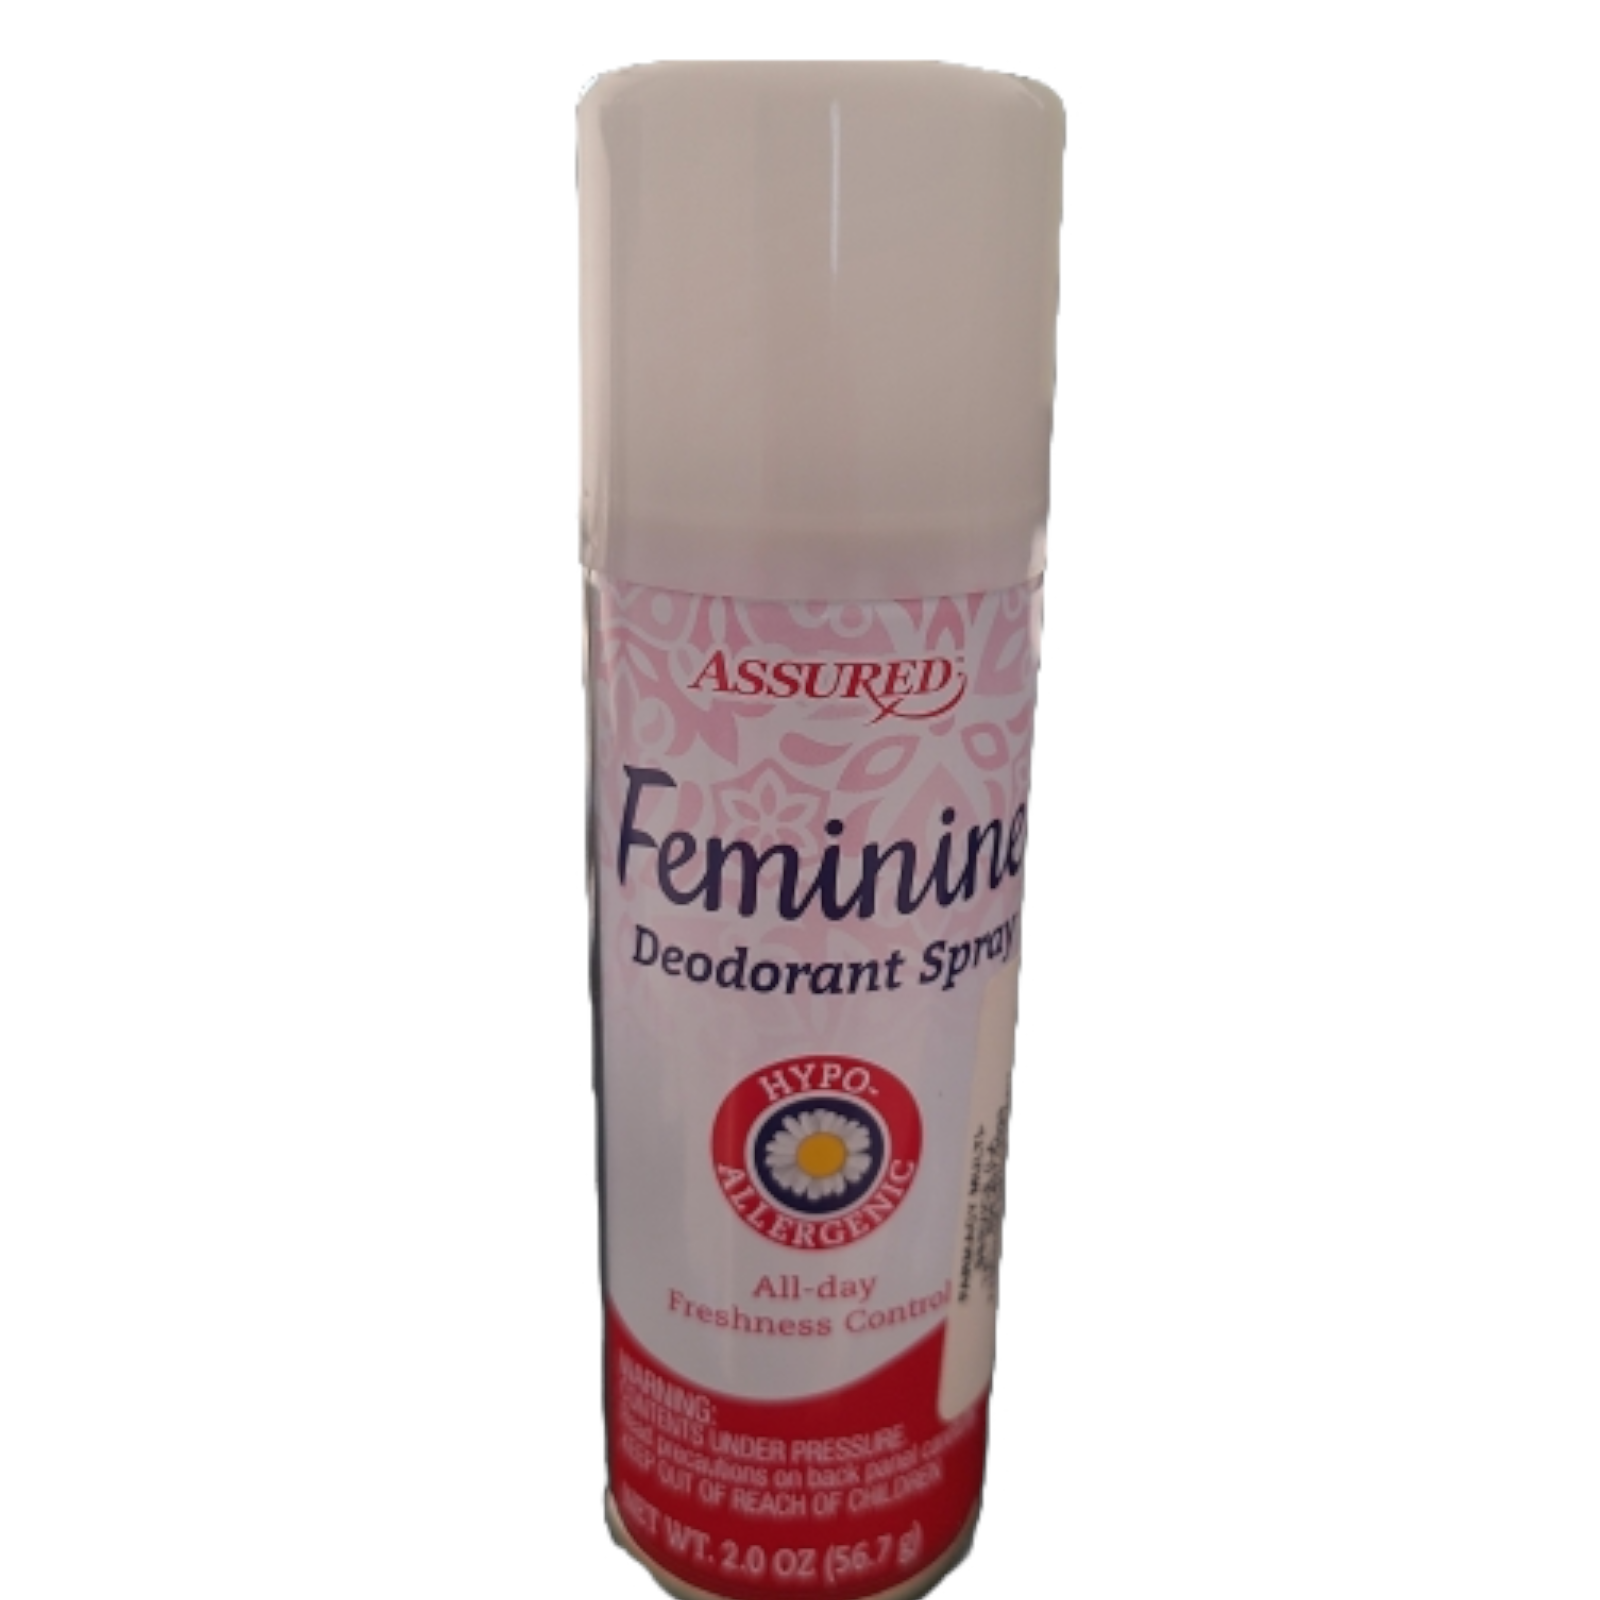 FEMININE DESODORANTE SPRAY FRESHNESS CONTROL 56.7G PARA UNISEX